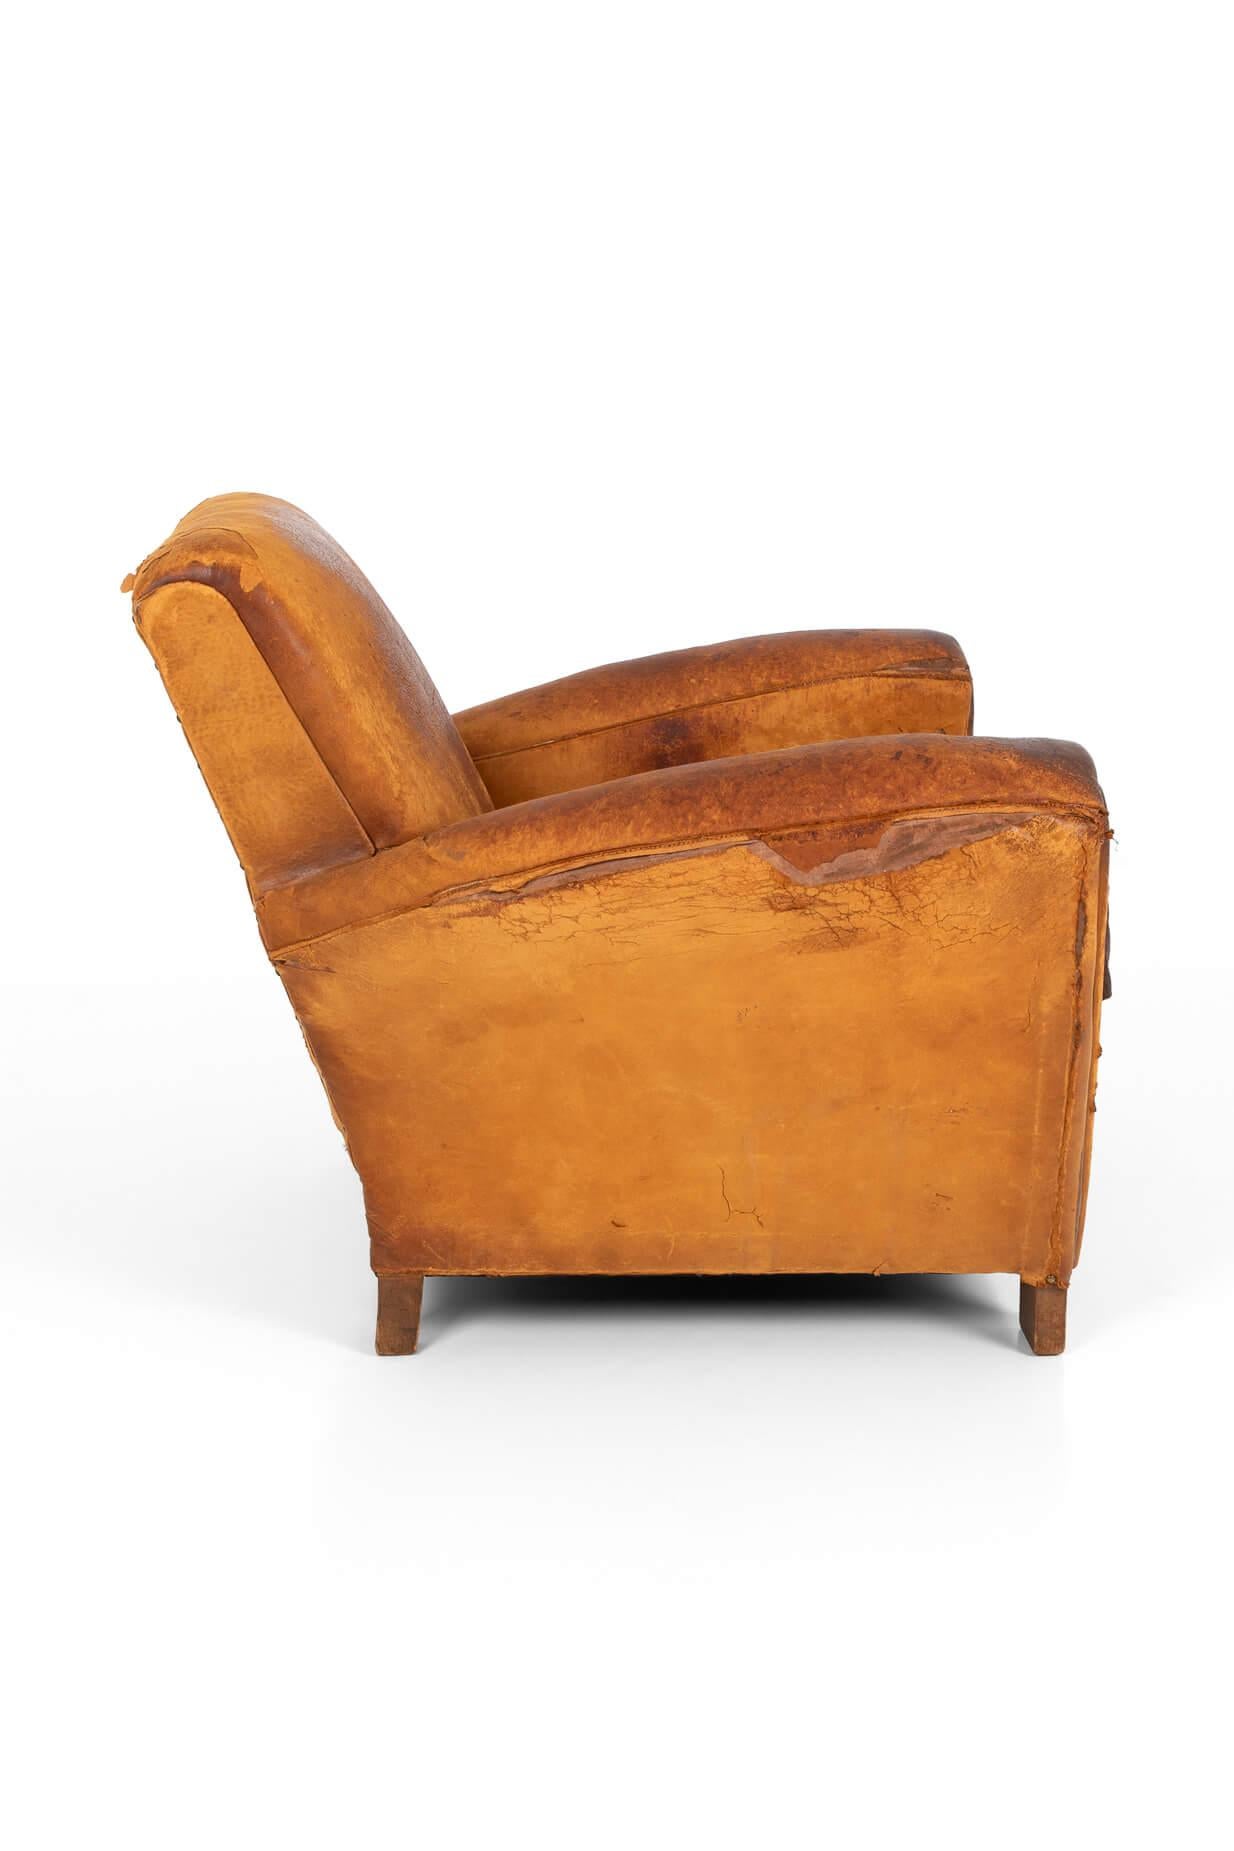 French Art Deco Rich Tan Leather Club Chair in Oak Frame, circa 1930